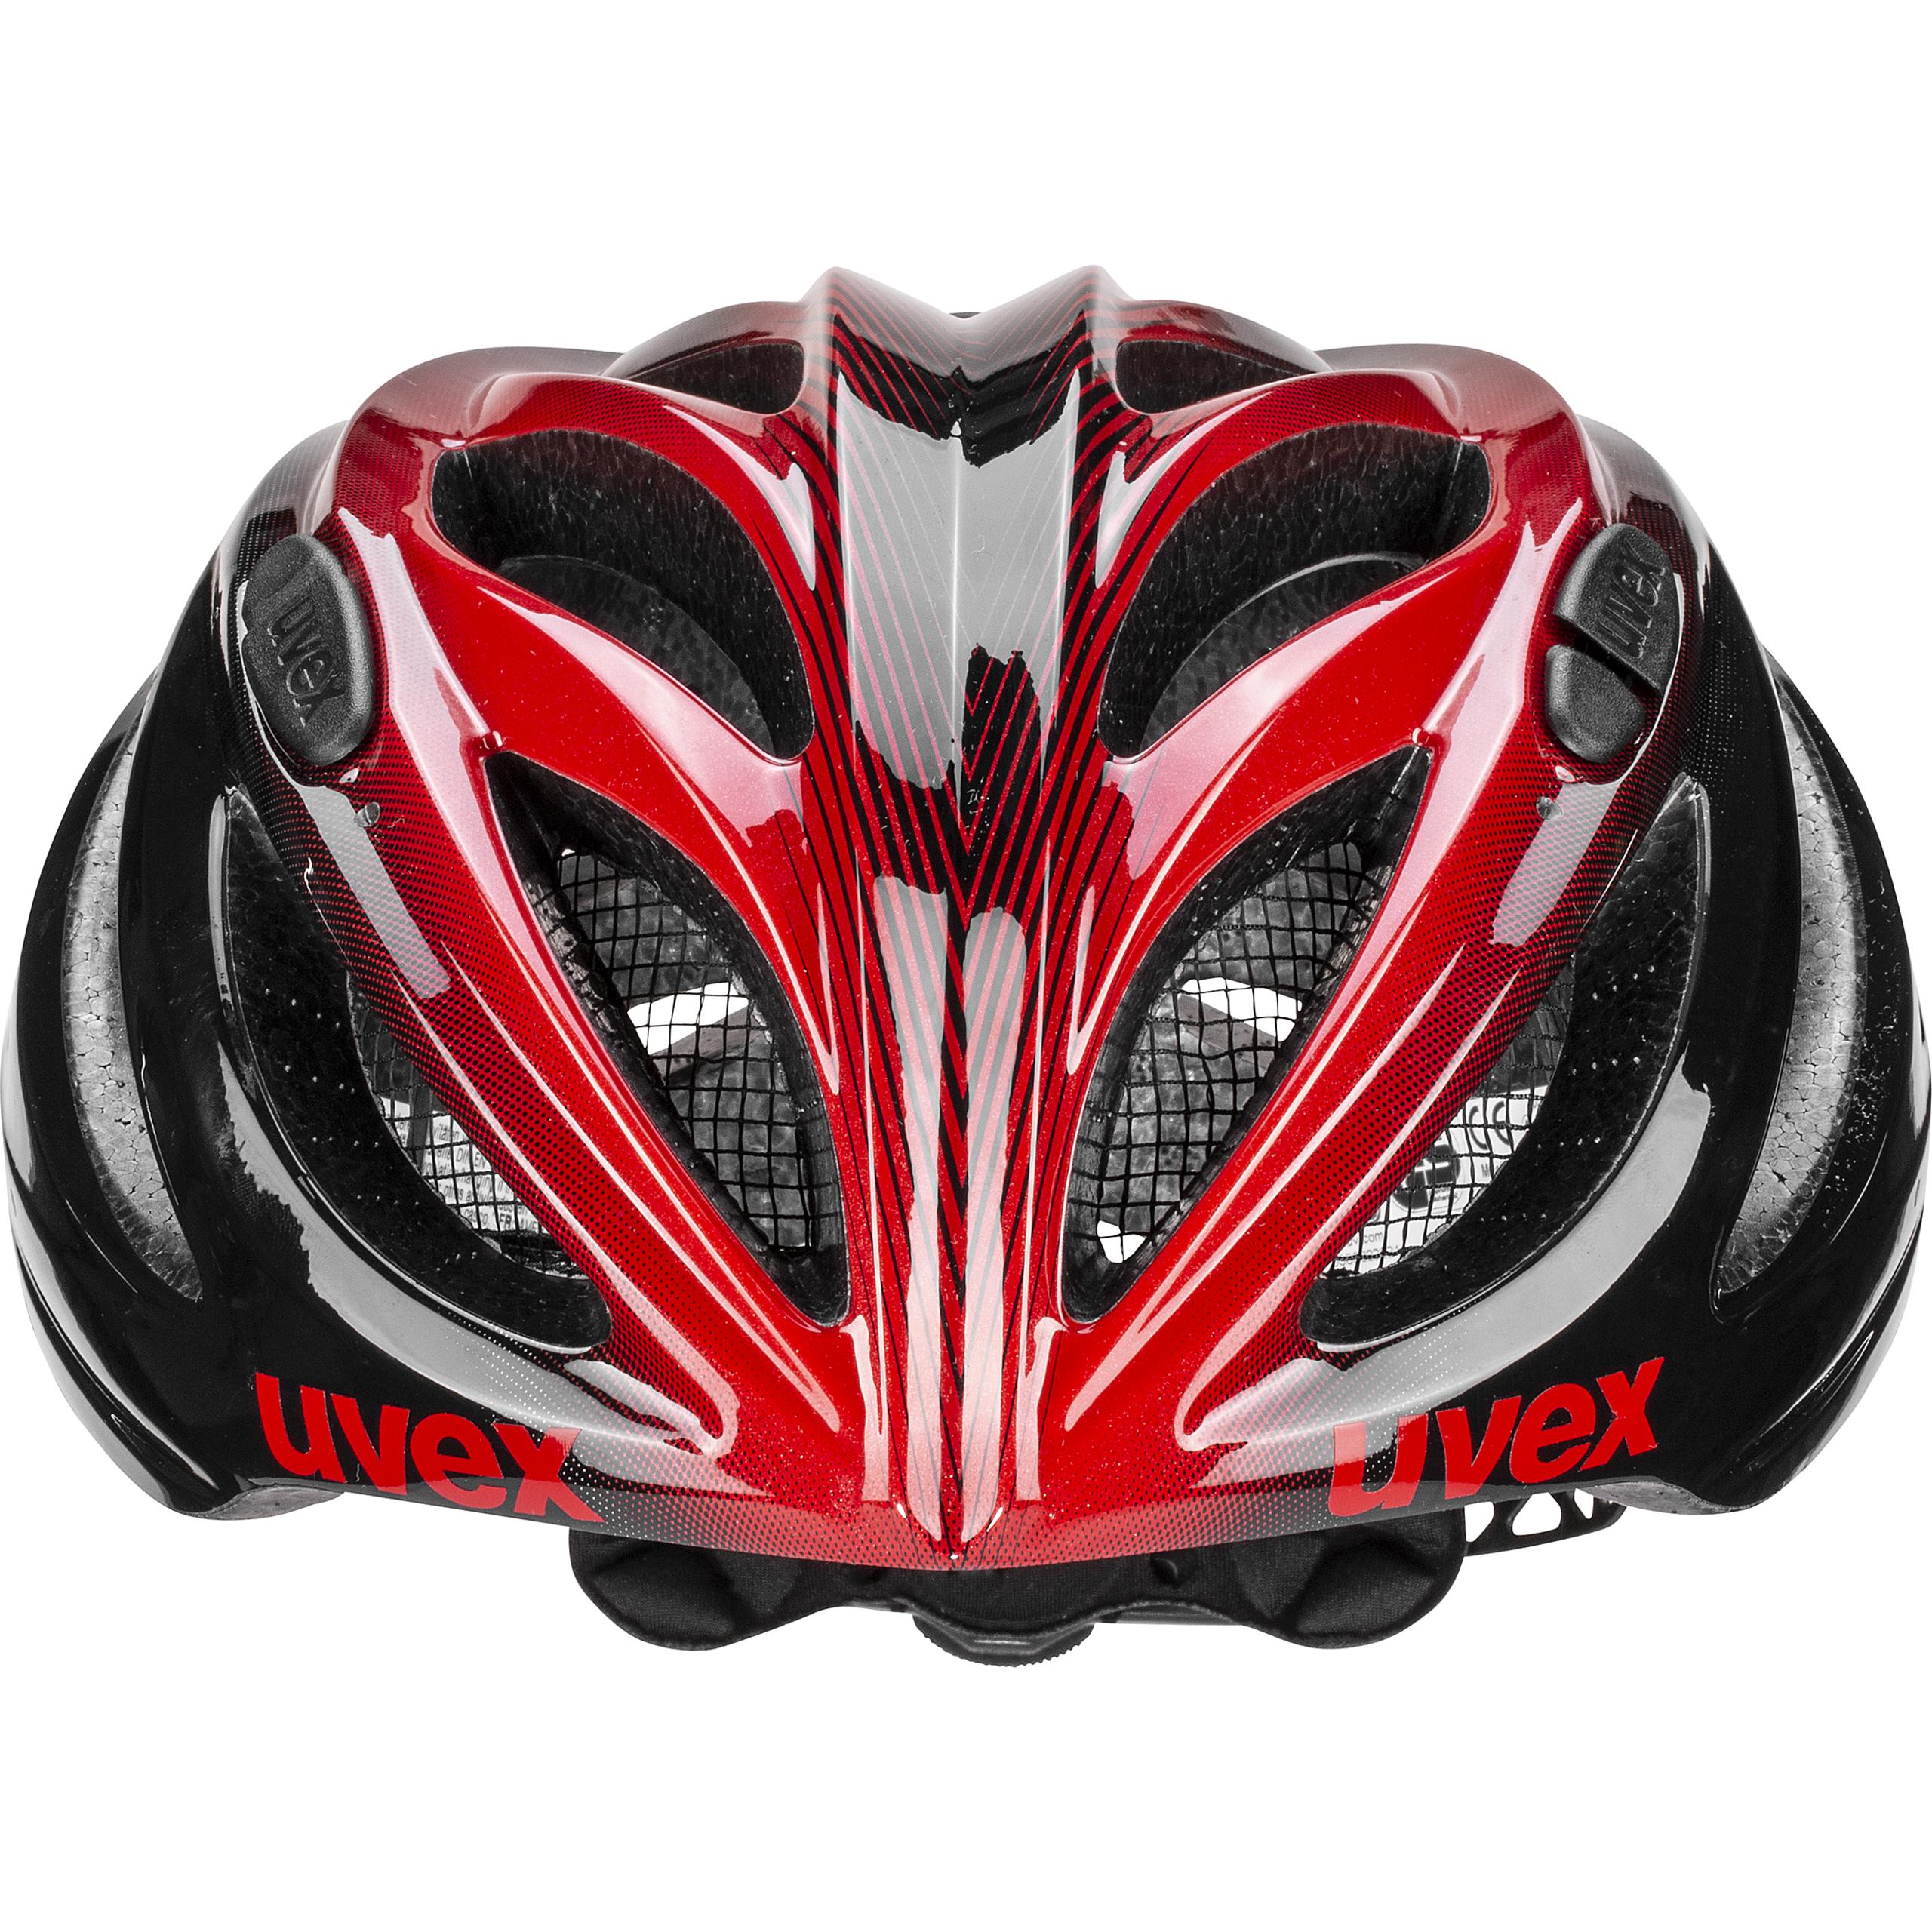 uvex boss race helmet